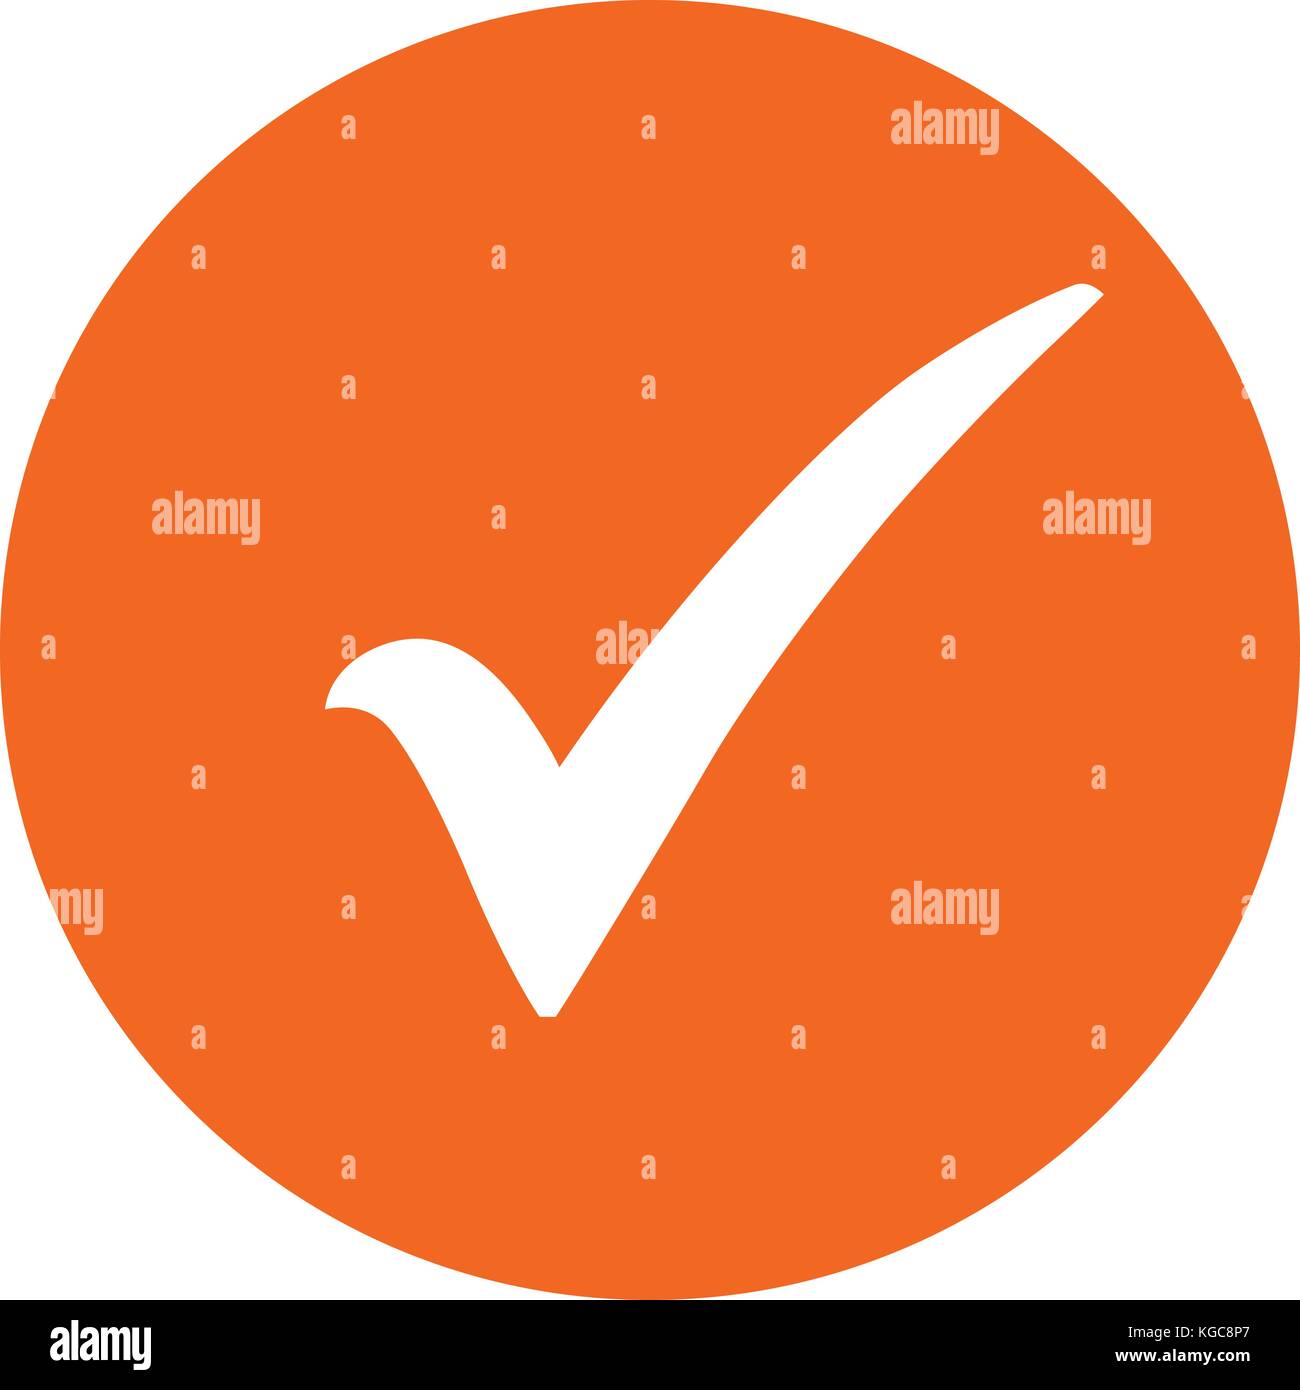 Icône de validation dans un cercle orange. blanc symbole d'activation dans un cercle orange, vector illustration. Illustration de Vecteur